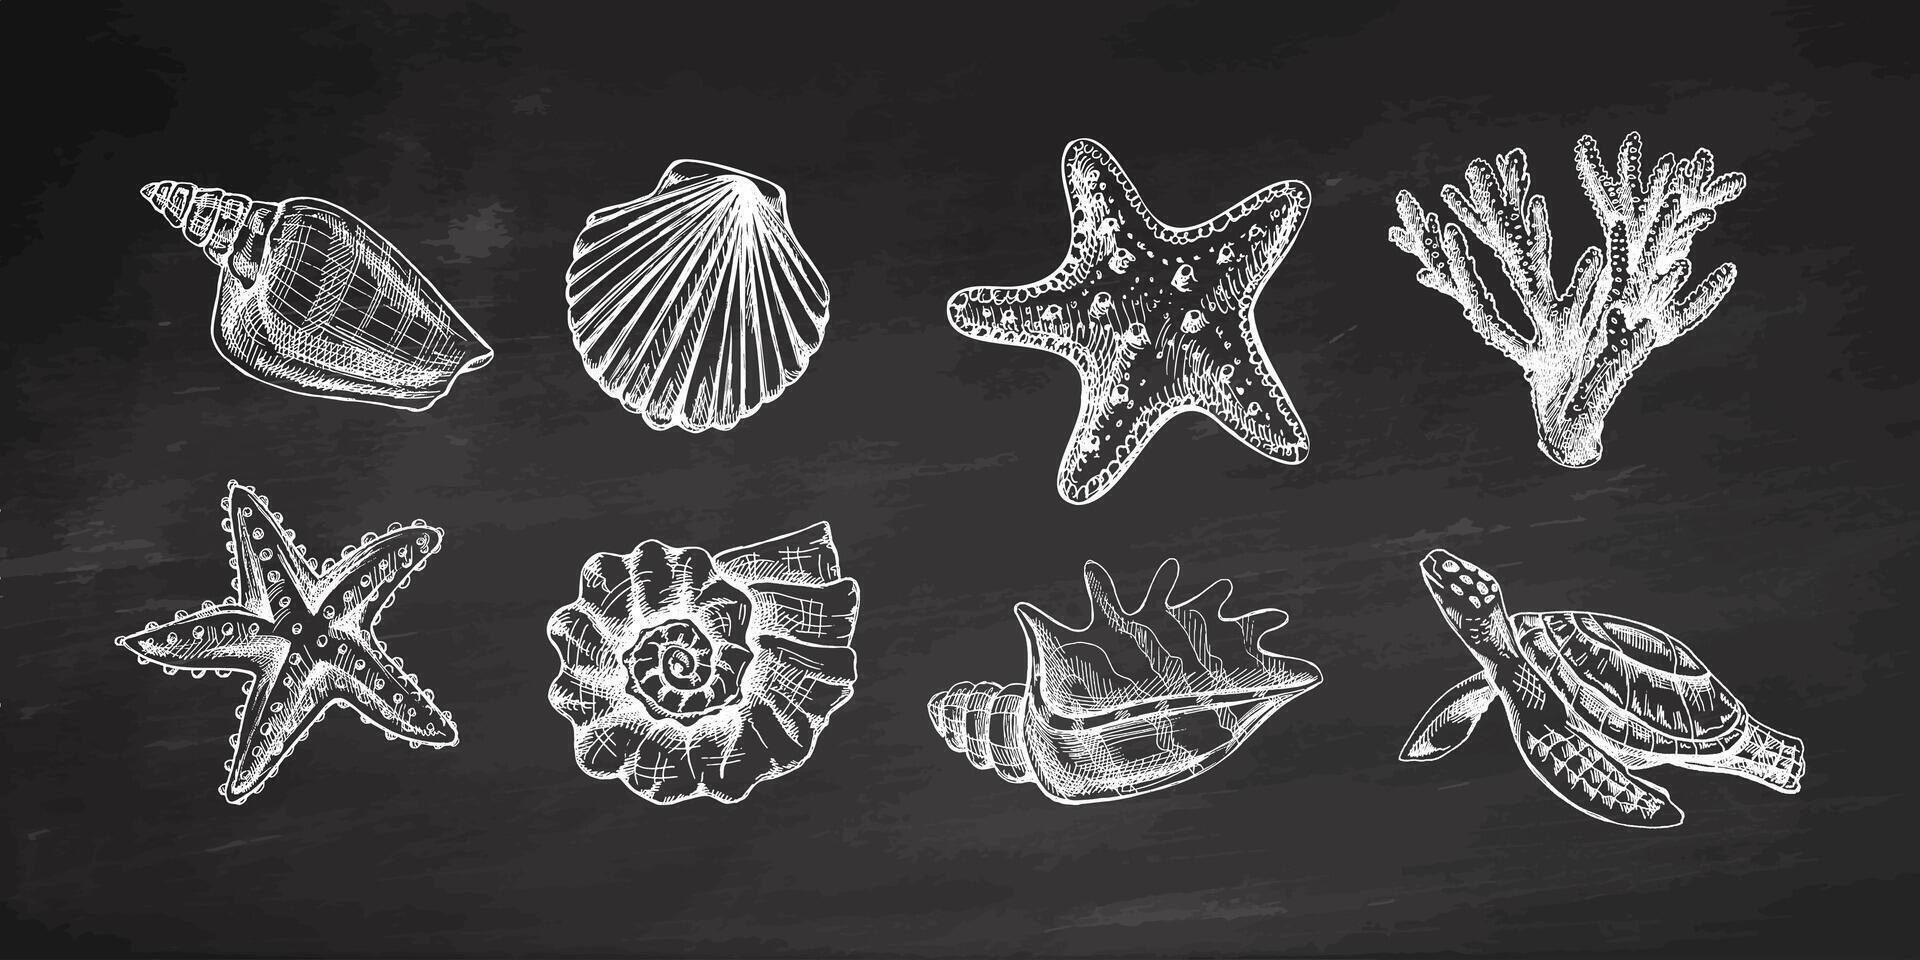 conchas marinas, estrella de mar, coral, mar tortuga, Vieira, nautilo molusco vector colocar. dibujado a mano bosquejo ilustración. colección de realista bocetos de varios Oceano criaturas en pizarra antecedentes.